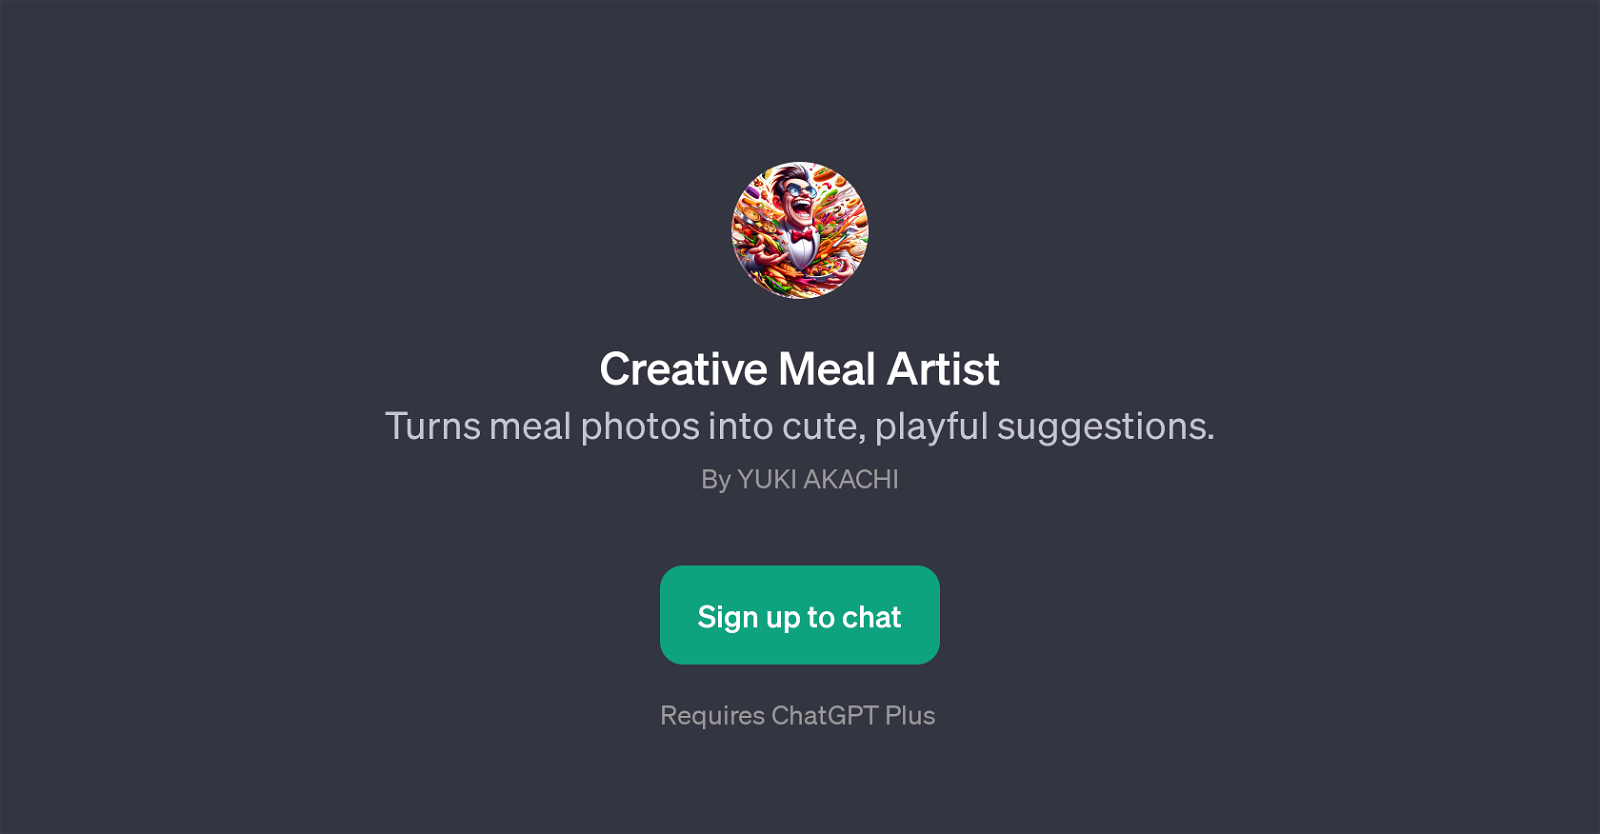 Creative Meal Artist website